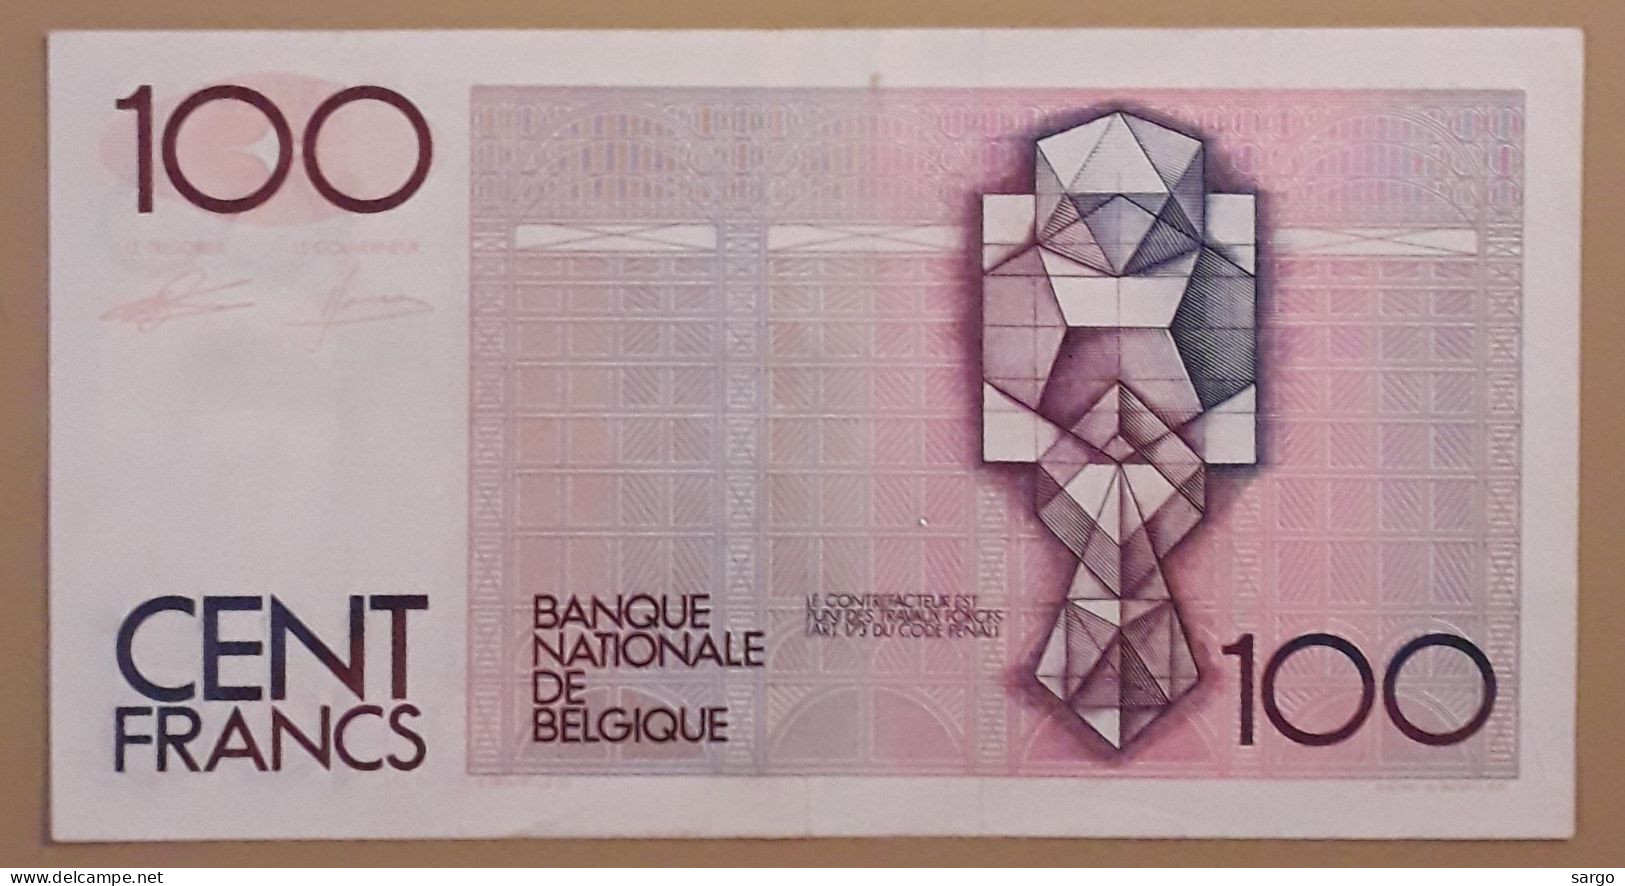 BELGIUM - 100 FRANCS - 1978 - CIRC P 142 - BANKNOTES - PAPER MONEY - CARTAMONETA - - 100 Francs